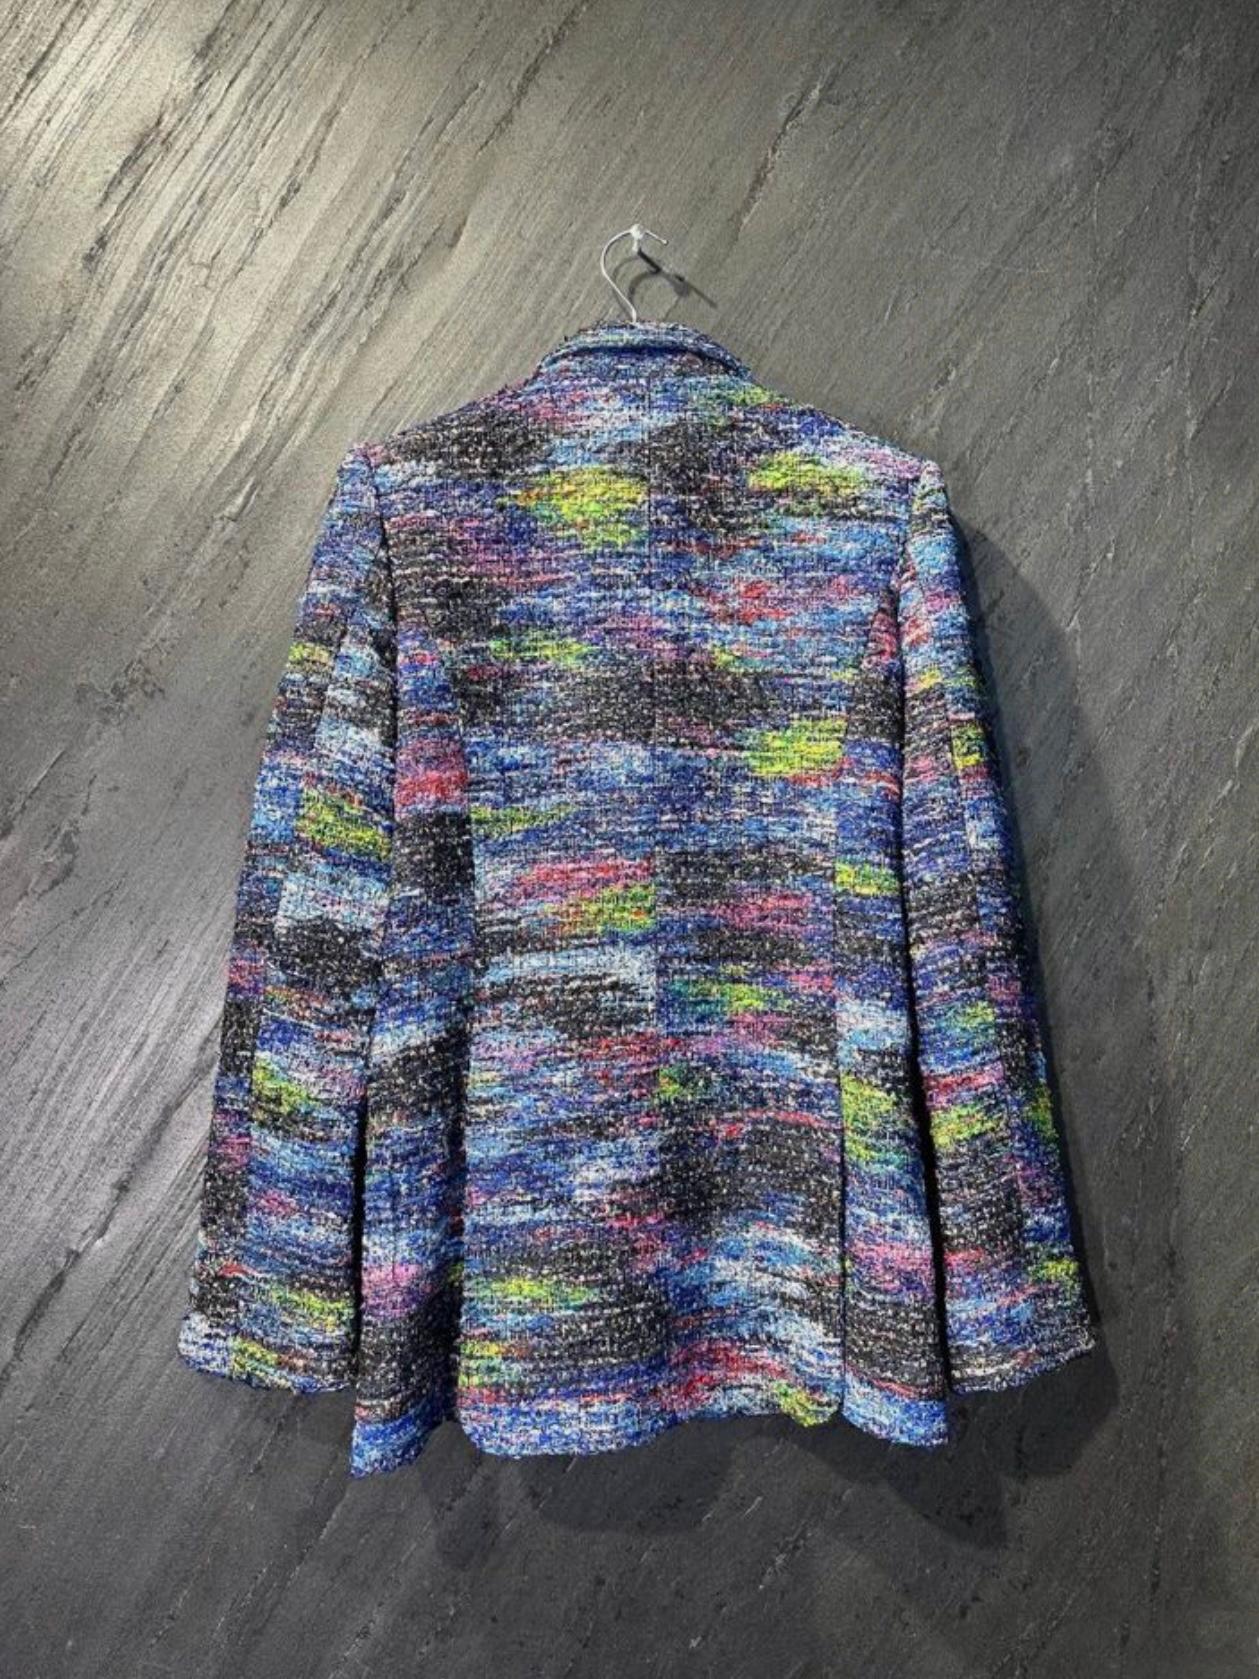 Chanel Supermodel Nata Vodianova Style Tweed Jacket 7